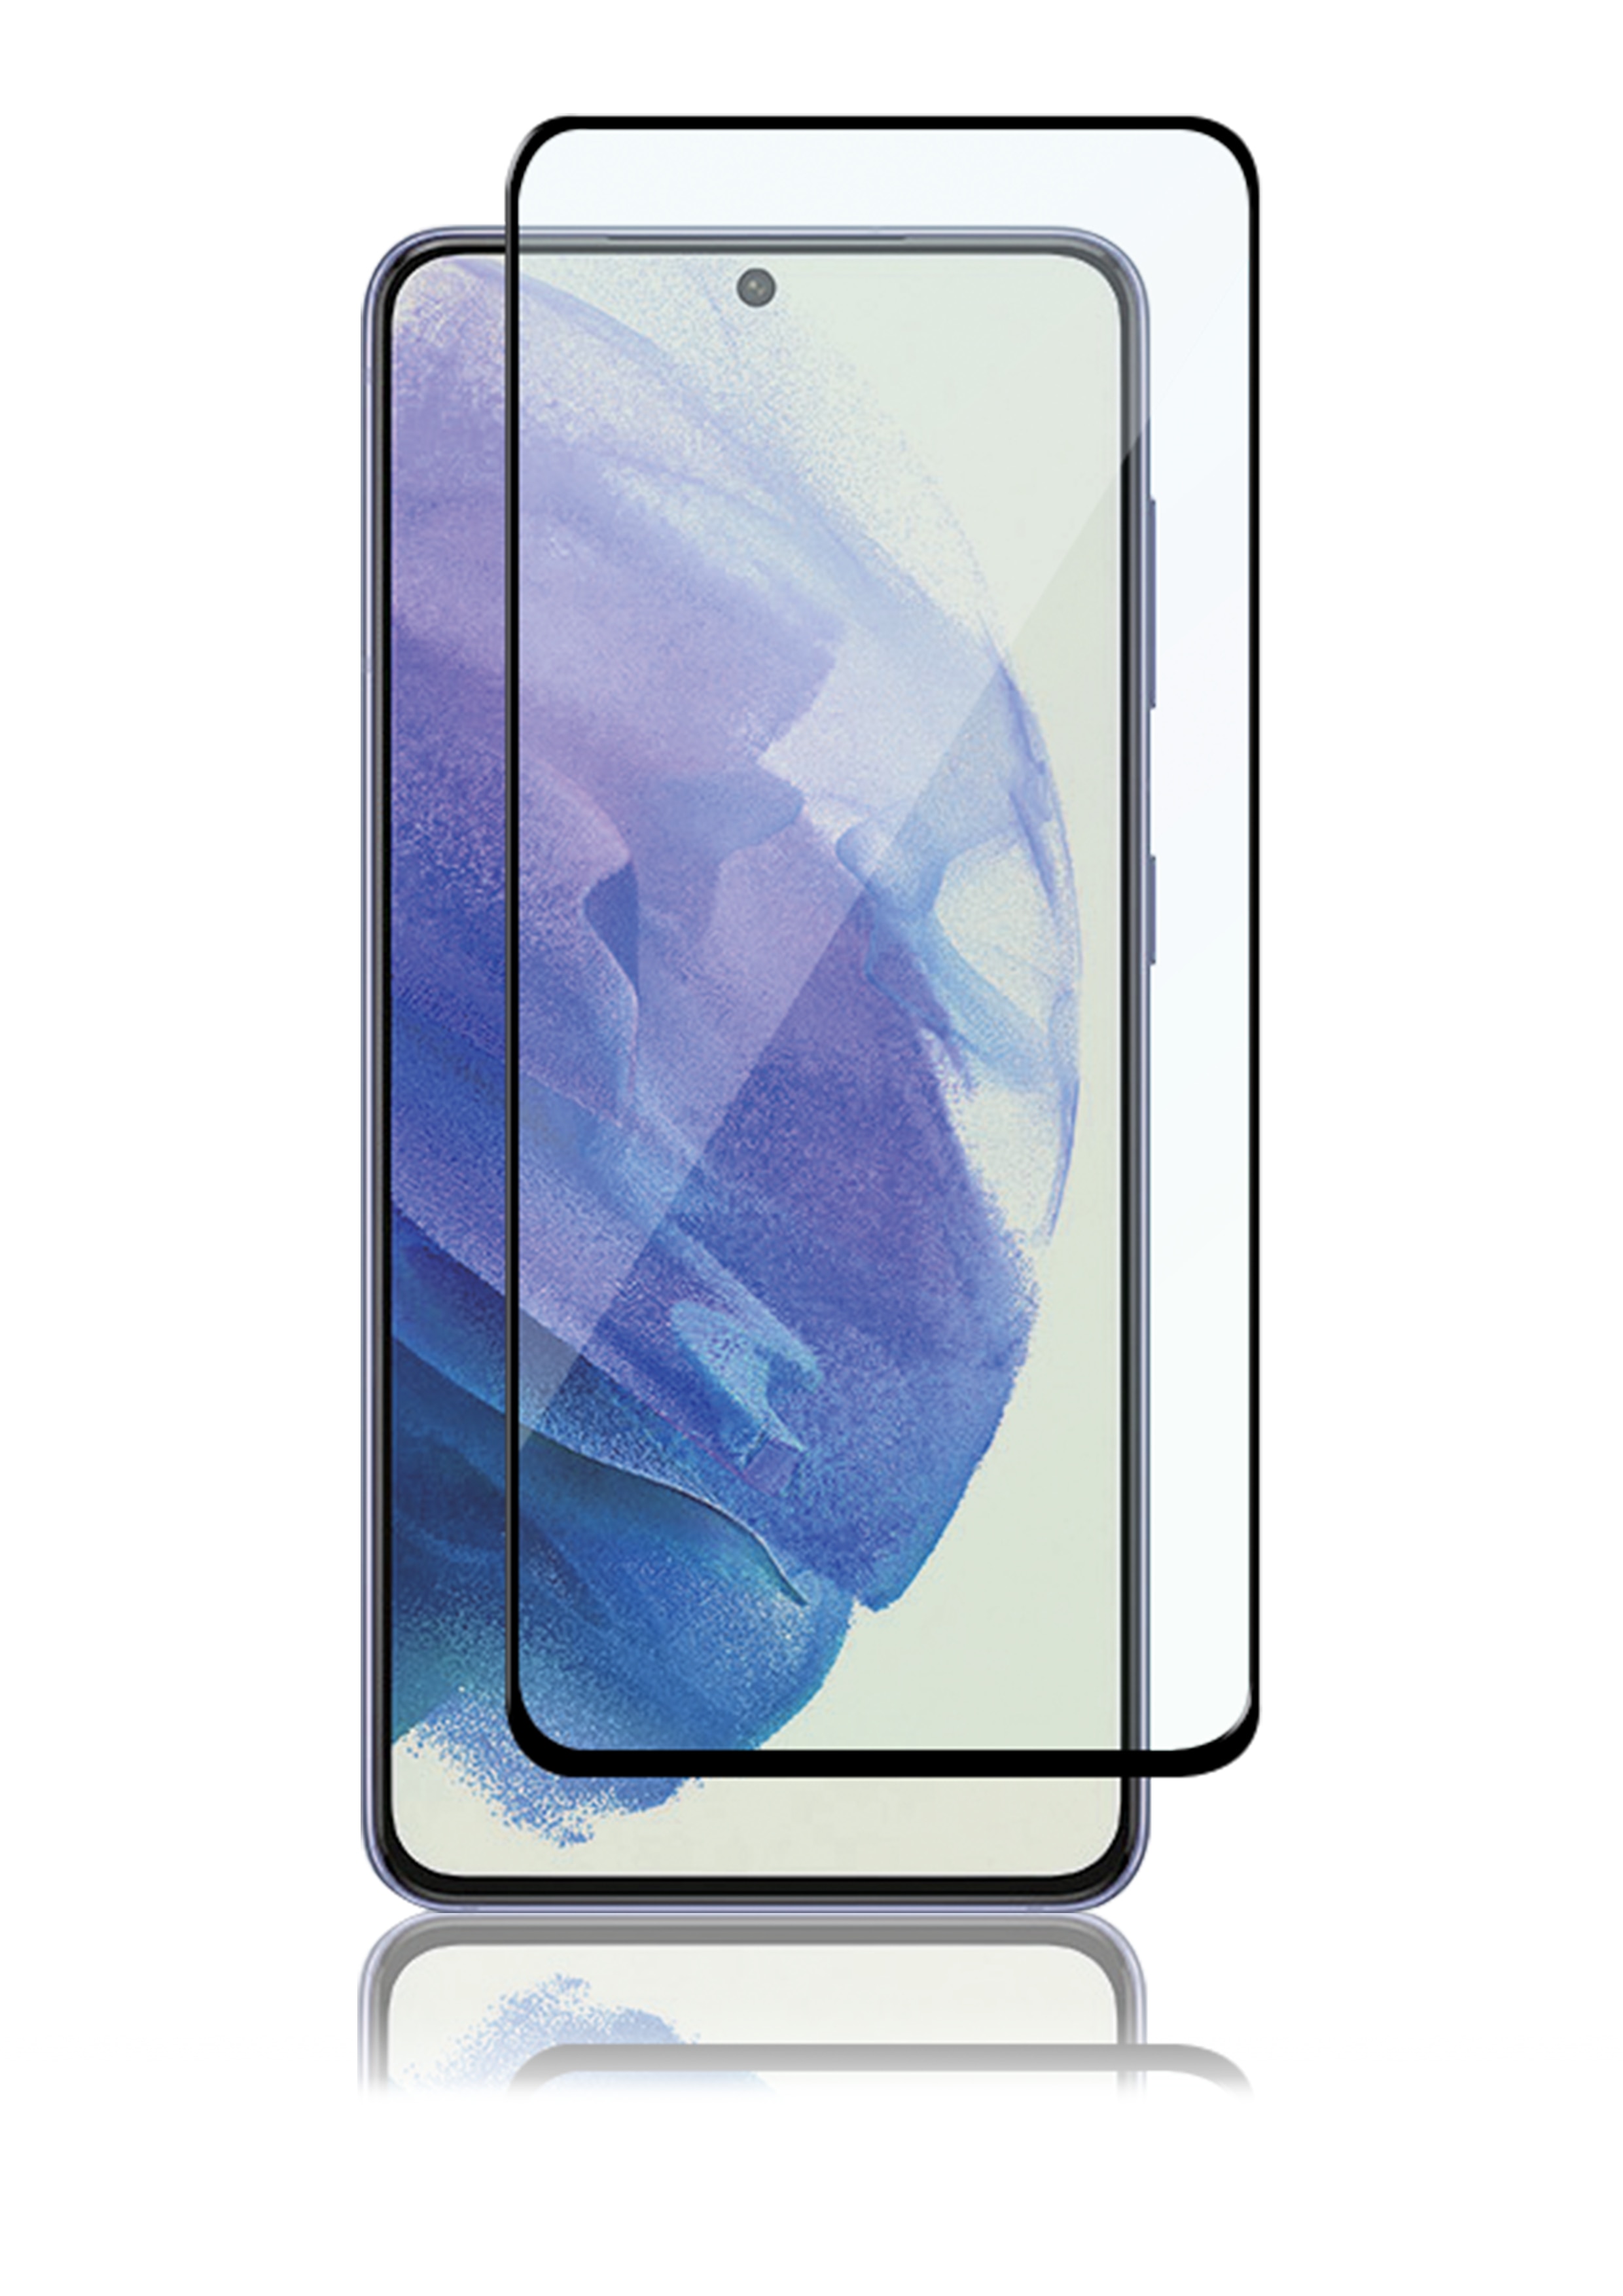 Full-Fit Glass Samsung Galaxy S21 FE